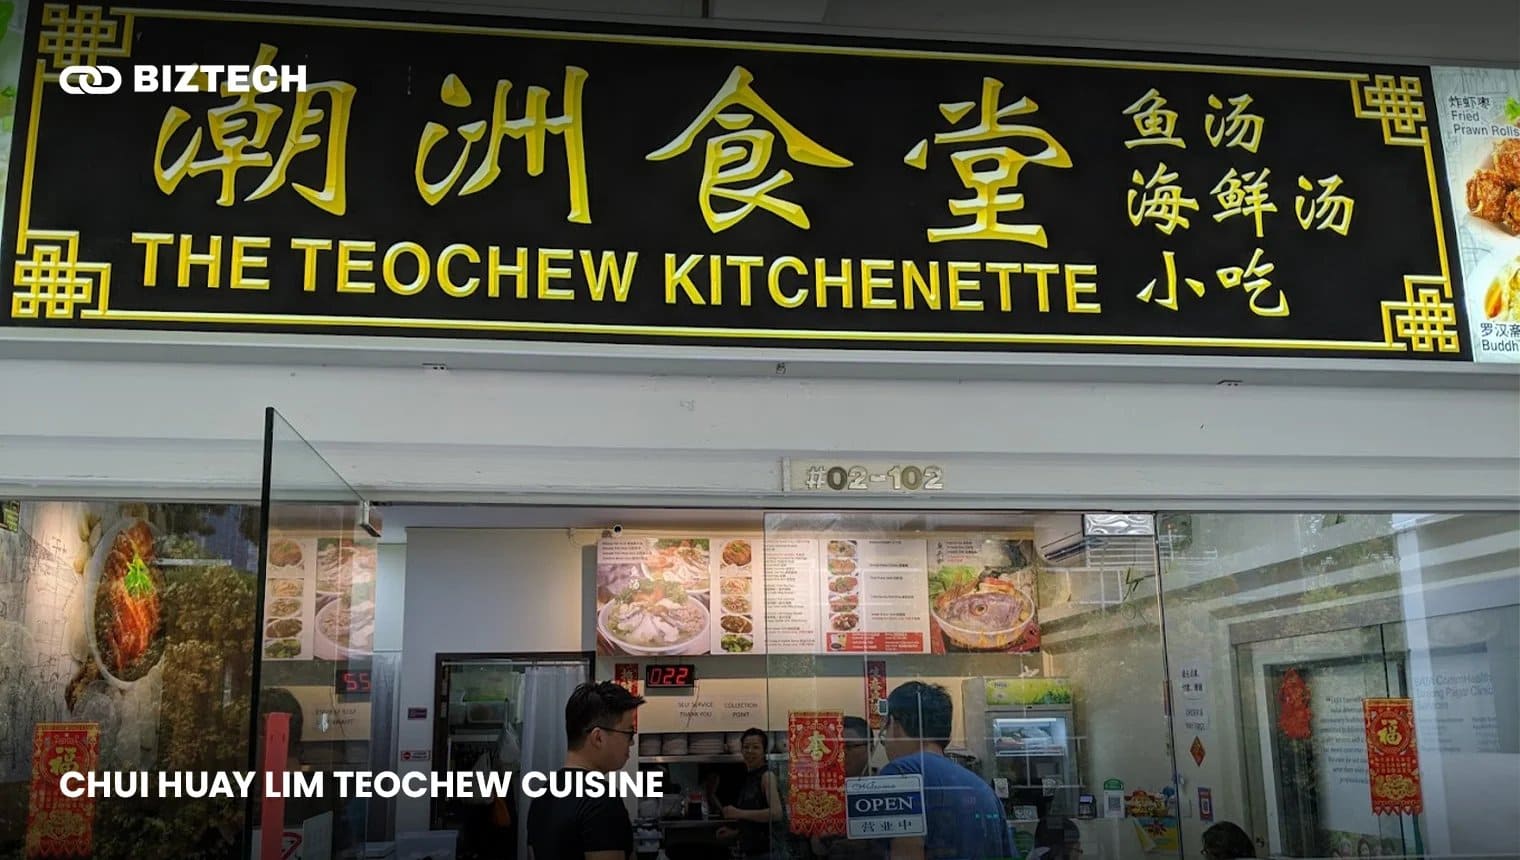 The Teochew Kitchenette